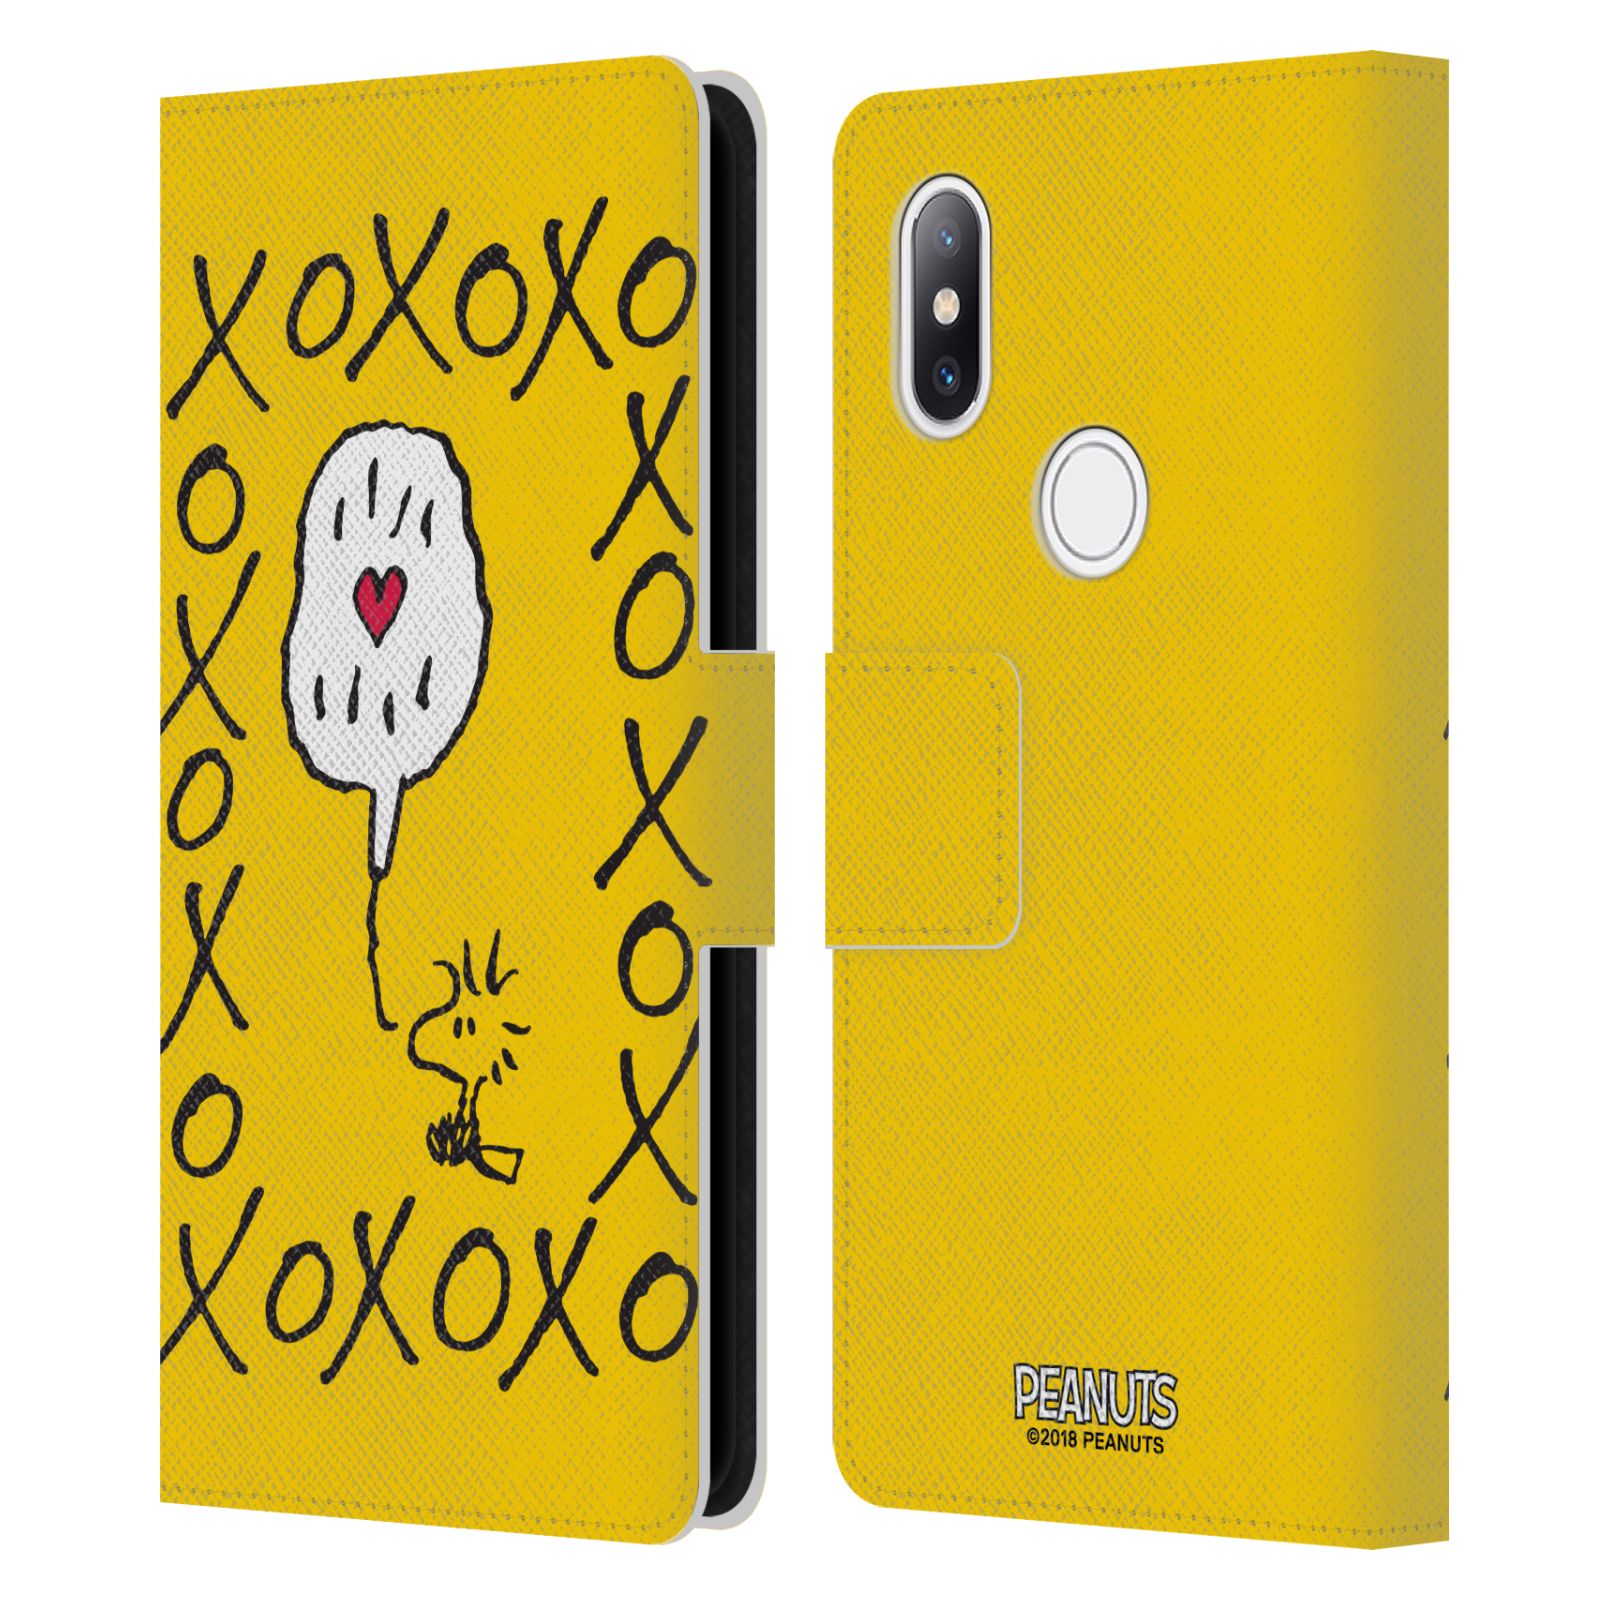 Pouzdro na mobil Xiaomi Mi Mix 2s - Head Case - Peanuts - Woodstock ptáček XOXO